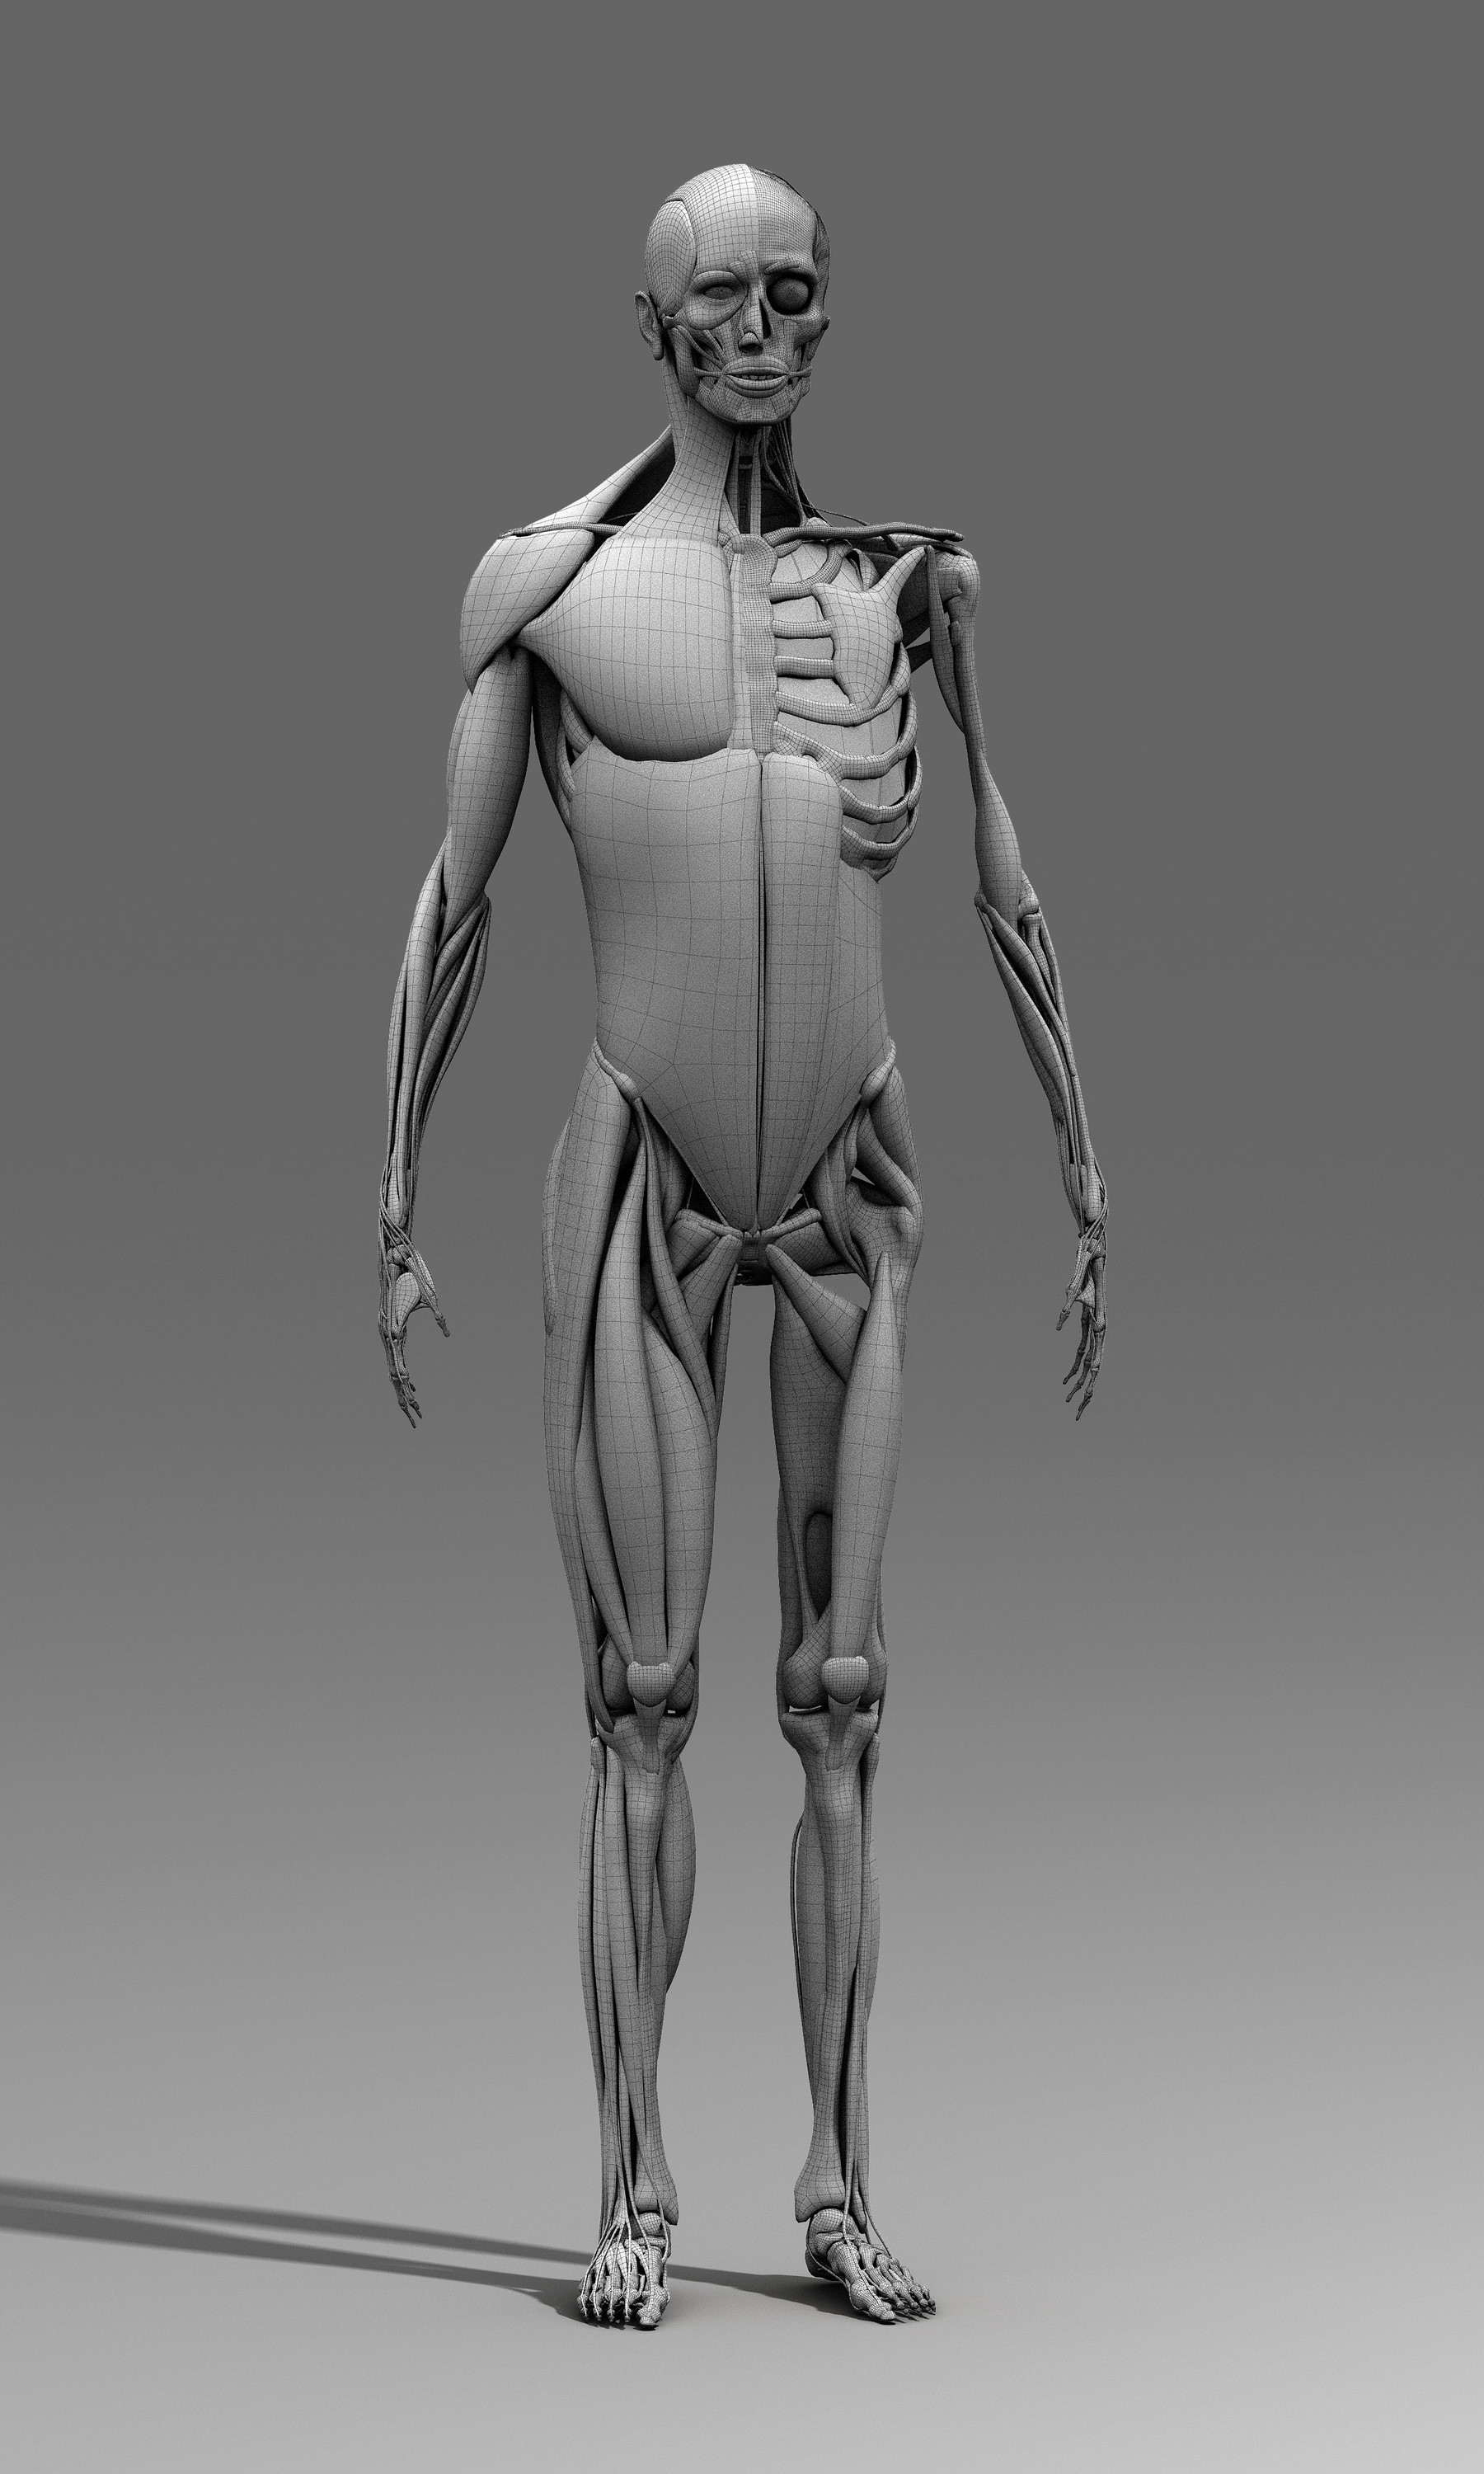 Male Anatomy Art Male Anatomy Diagram Front View Male Skeleton